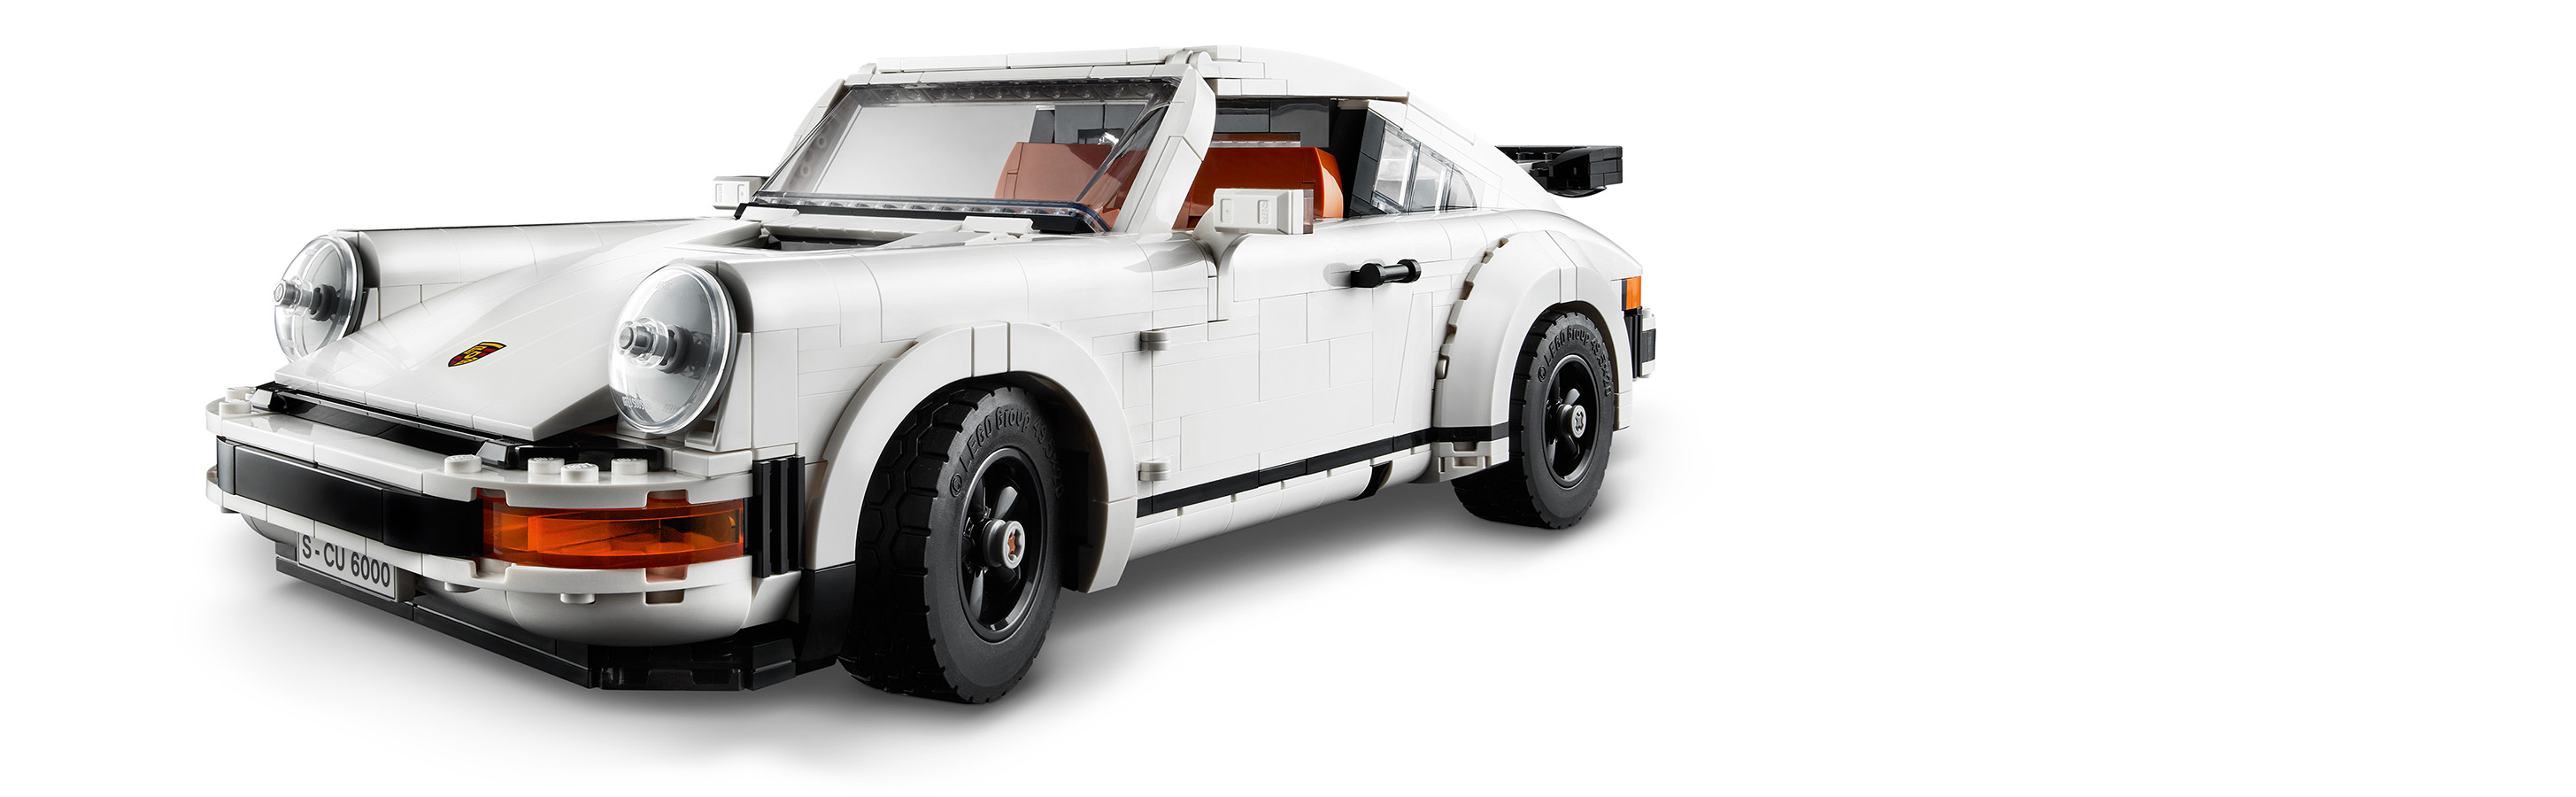 Lego 10295 Creator Expert Porsche 911 Turbo oder Targa 2 in 1 B-Ware 